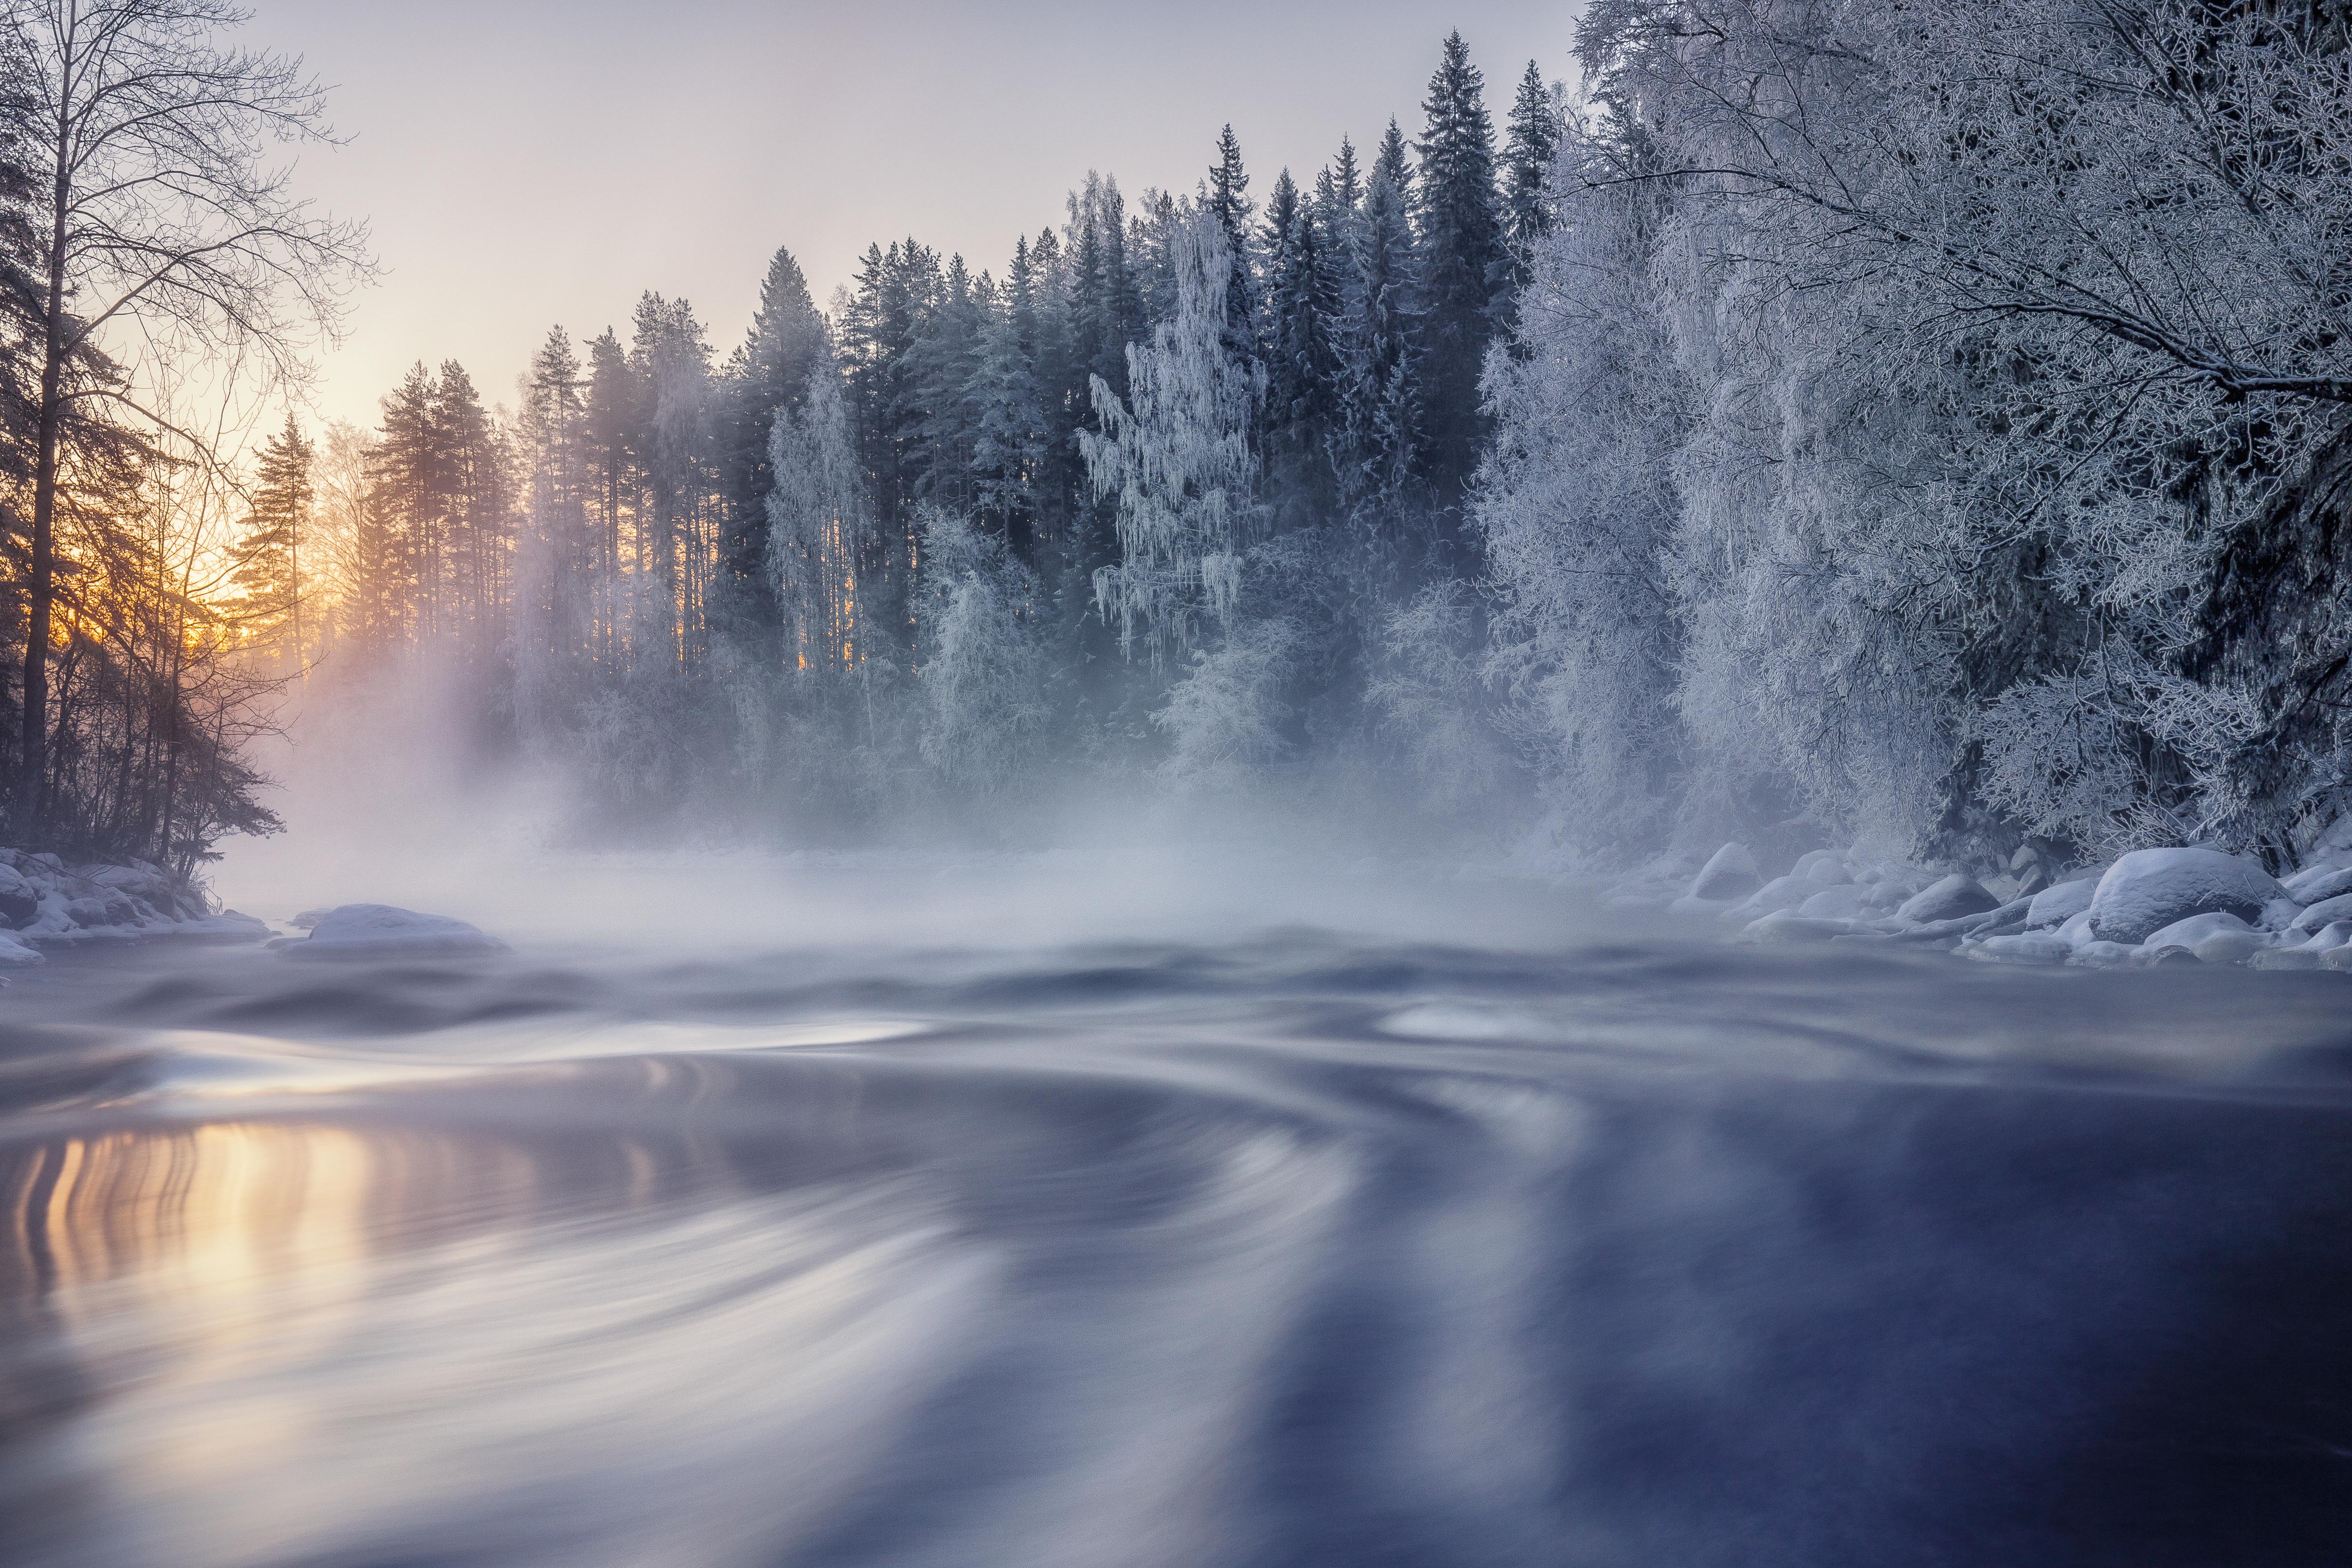 Cold winter Morning, Kapeenkoski Finland by Bansman